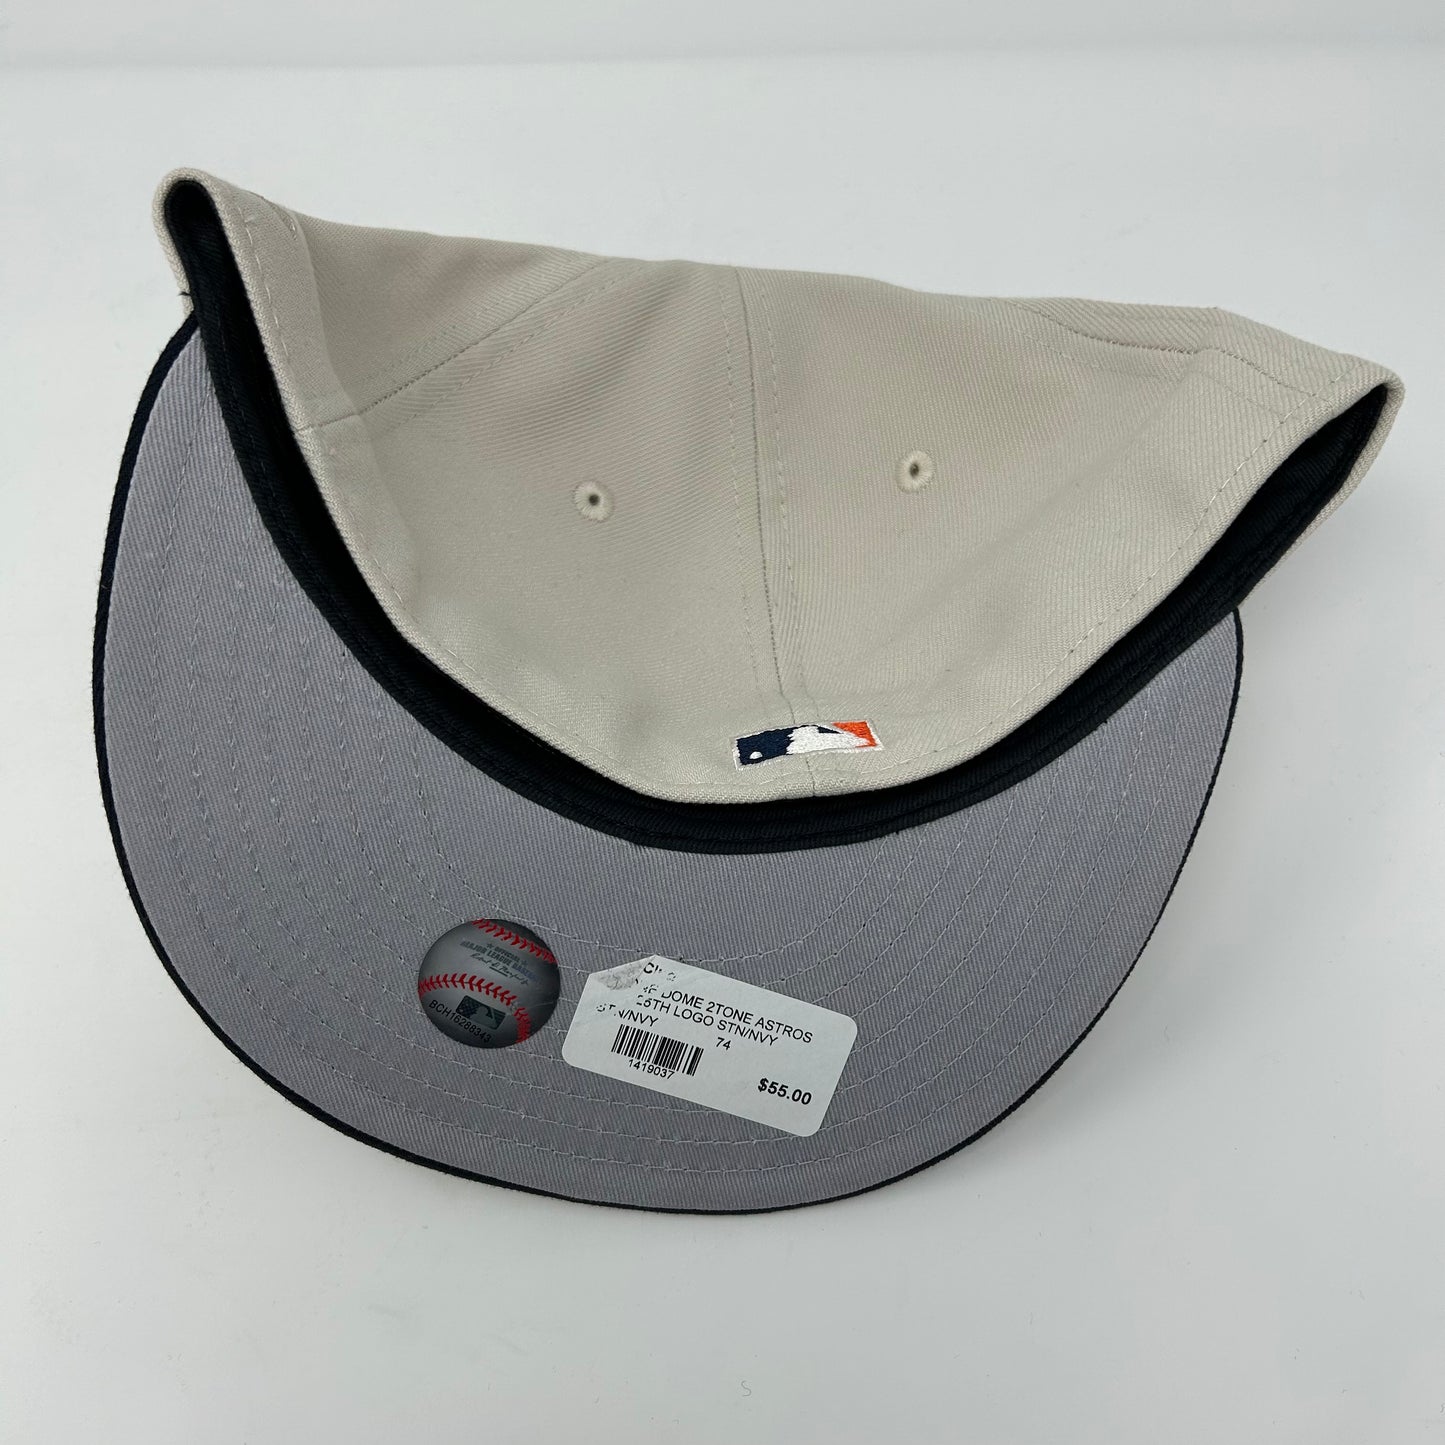 Houston Astros “Astrodome Stone” Hat